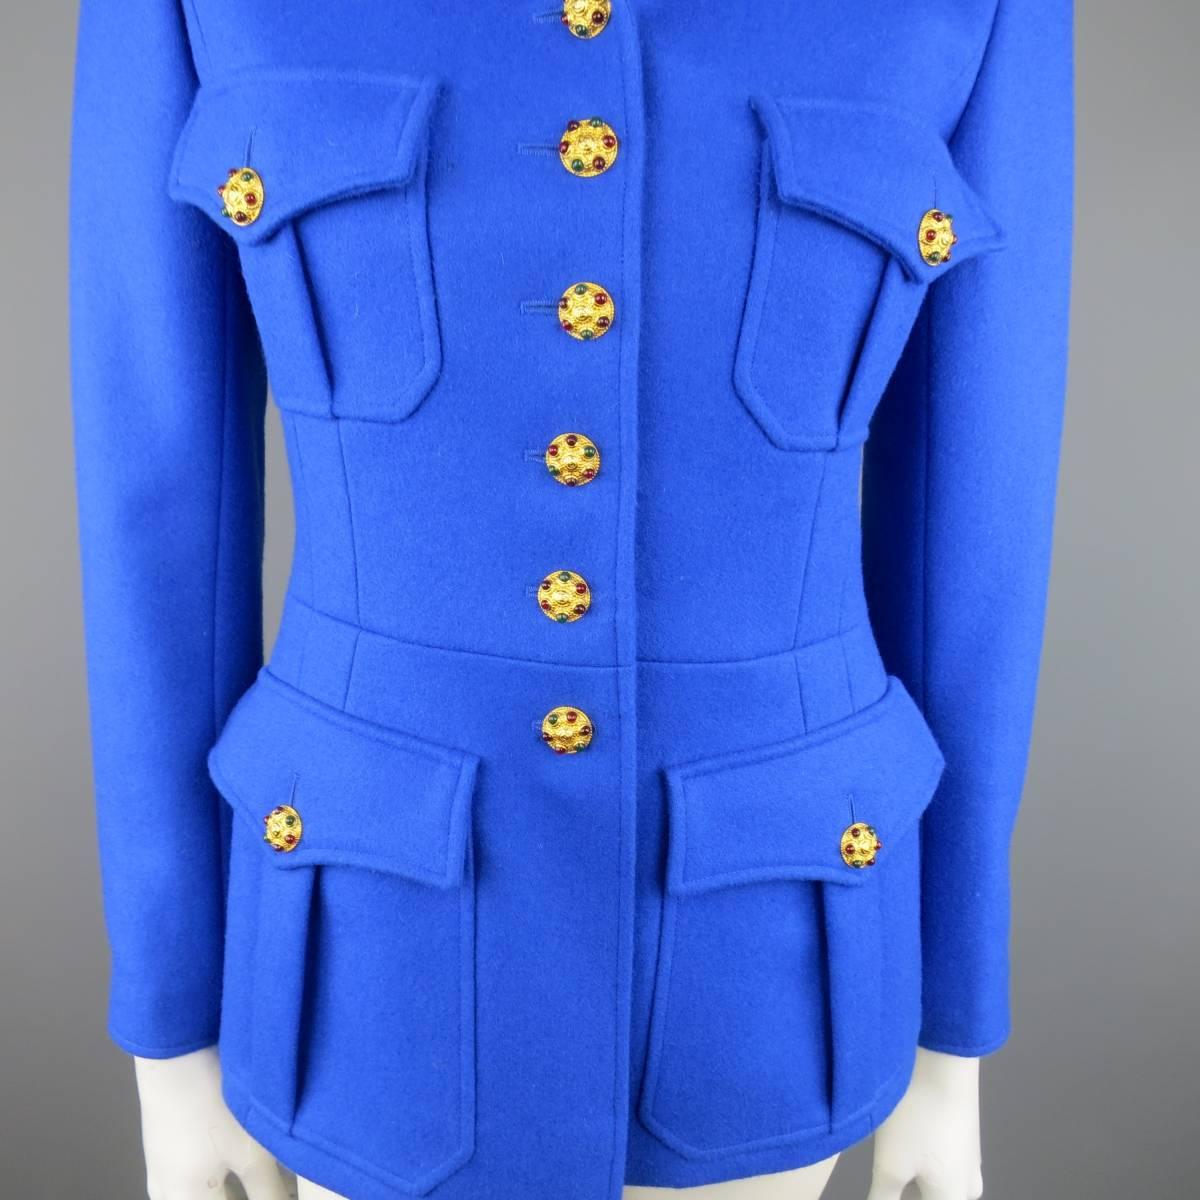 chanel military jacket